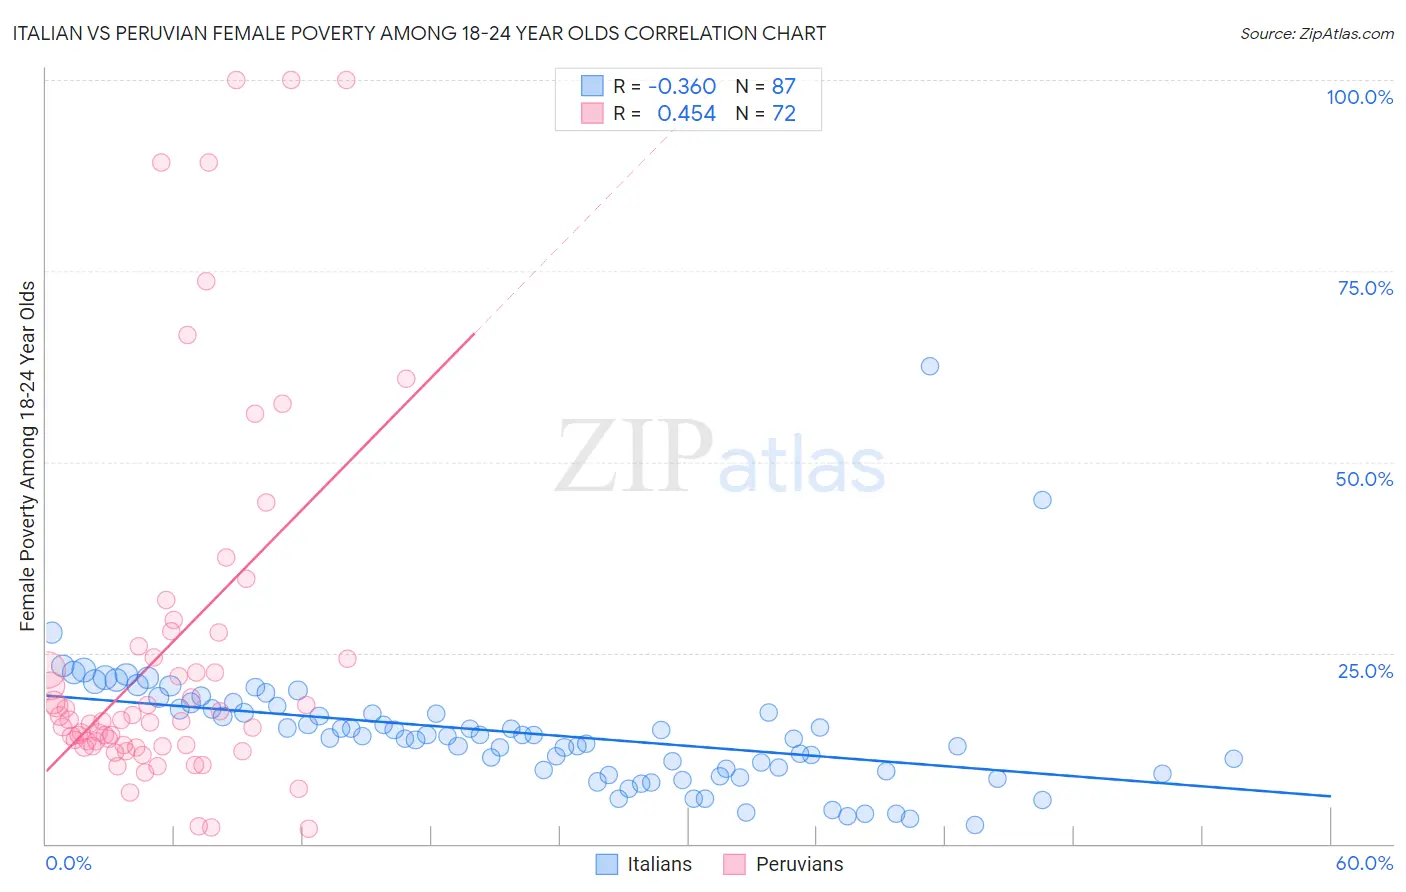 Italian vs Peruvian Female Poverty Among 18-24 Year Olds